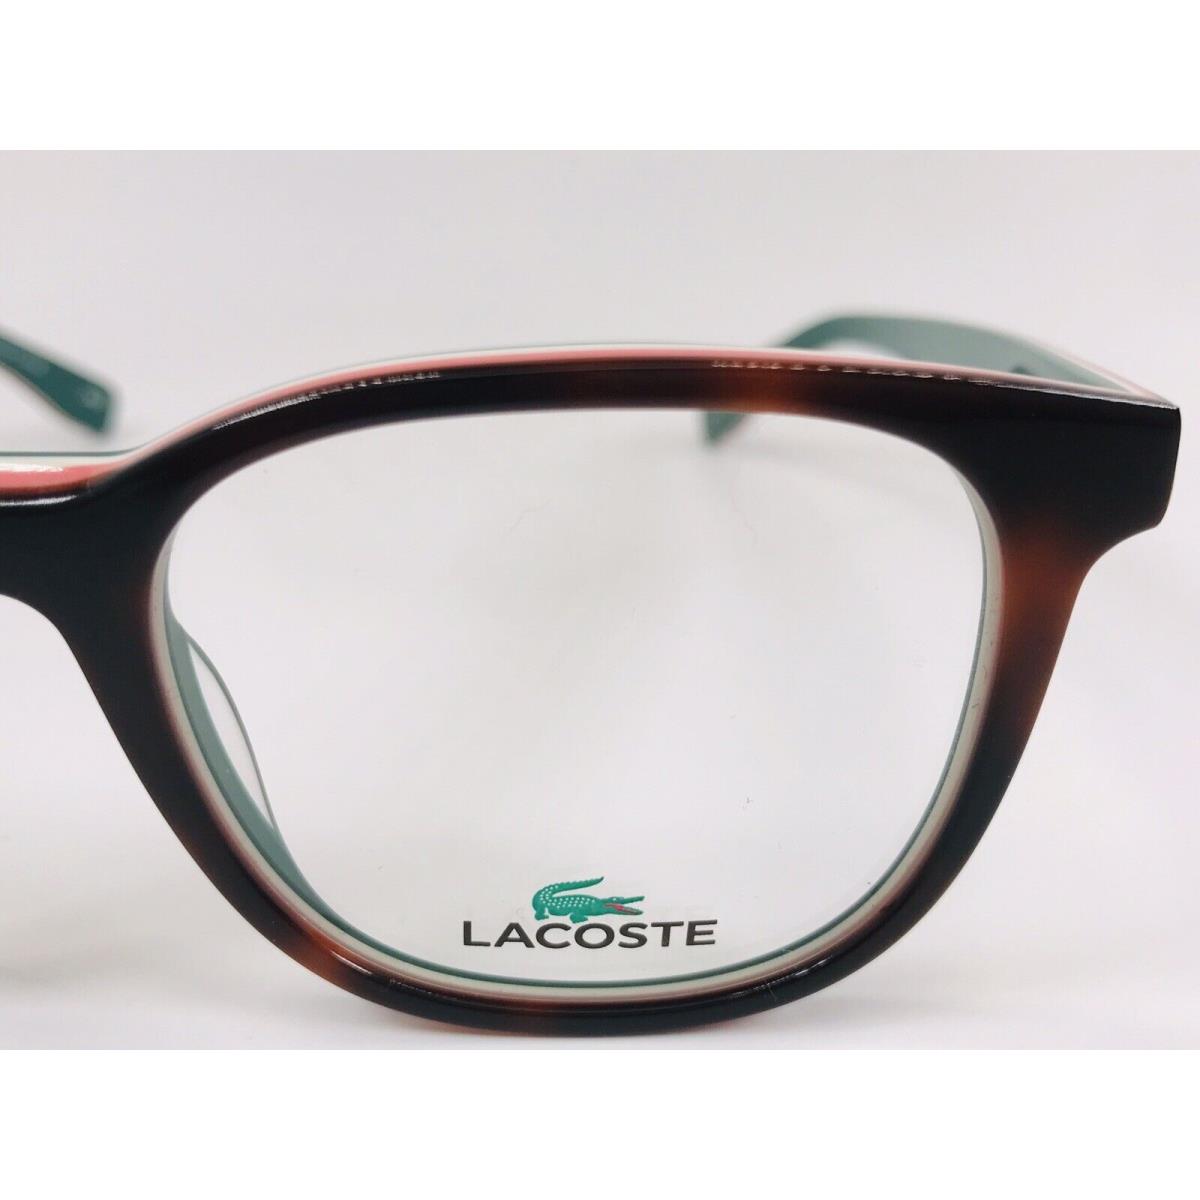 Lacoste eyeglasses  - 214 , Dark Havana & Multi Colored Layers Frame 6